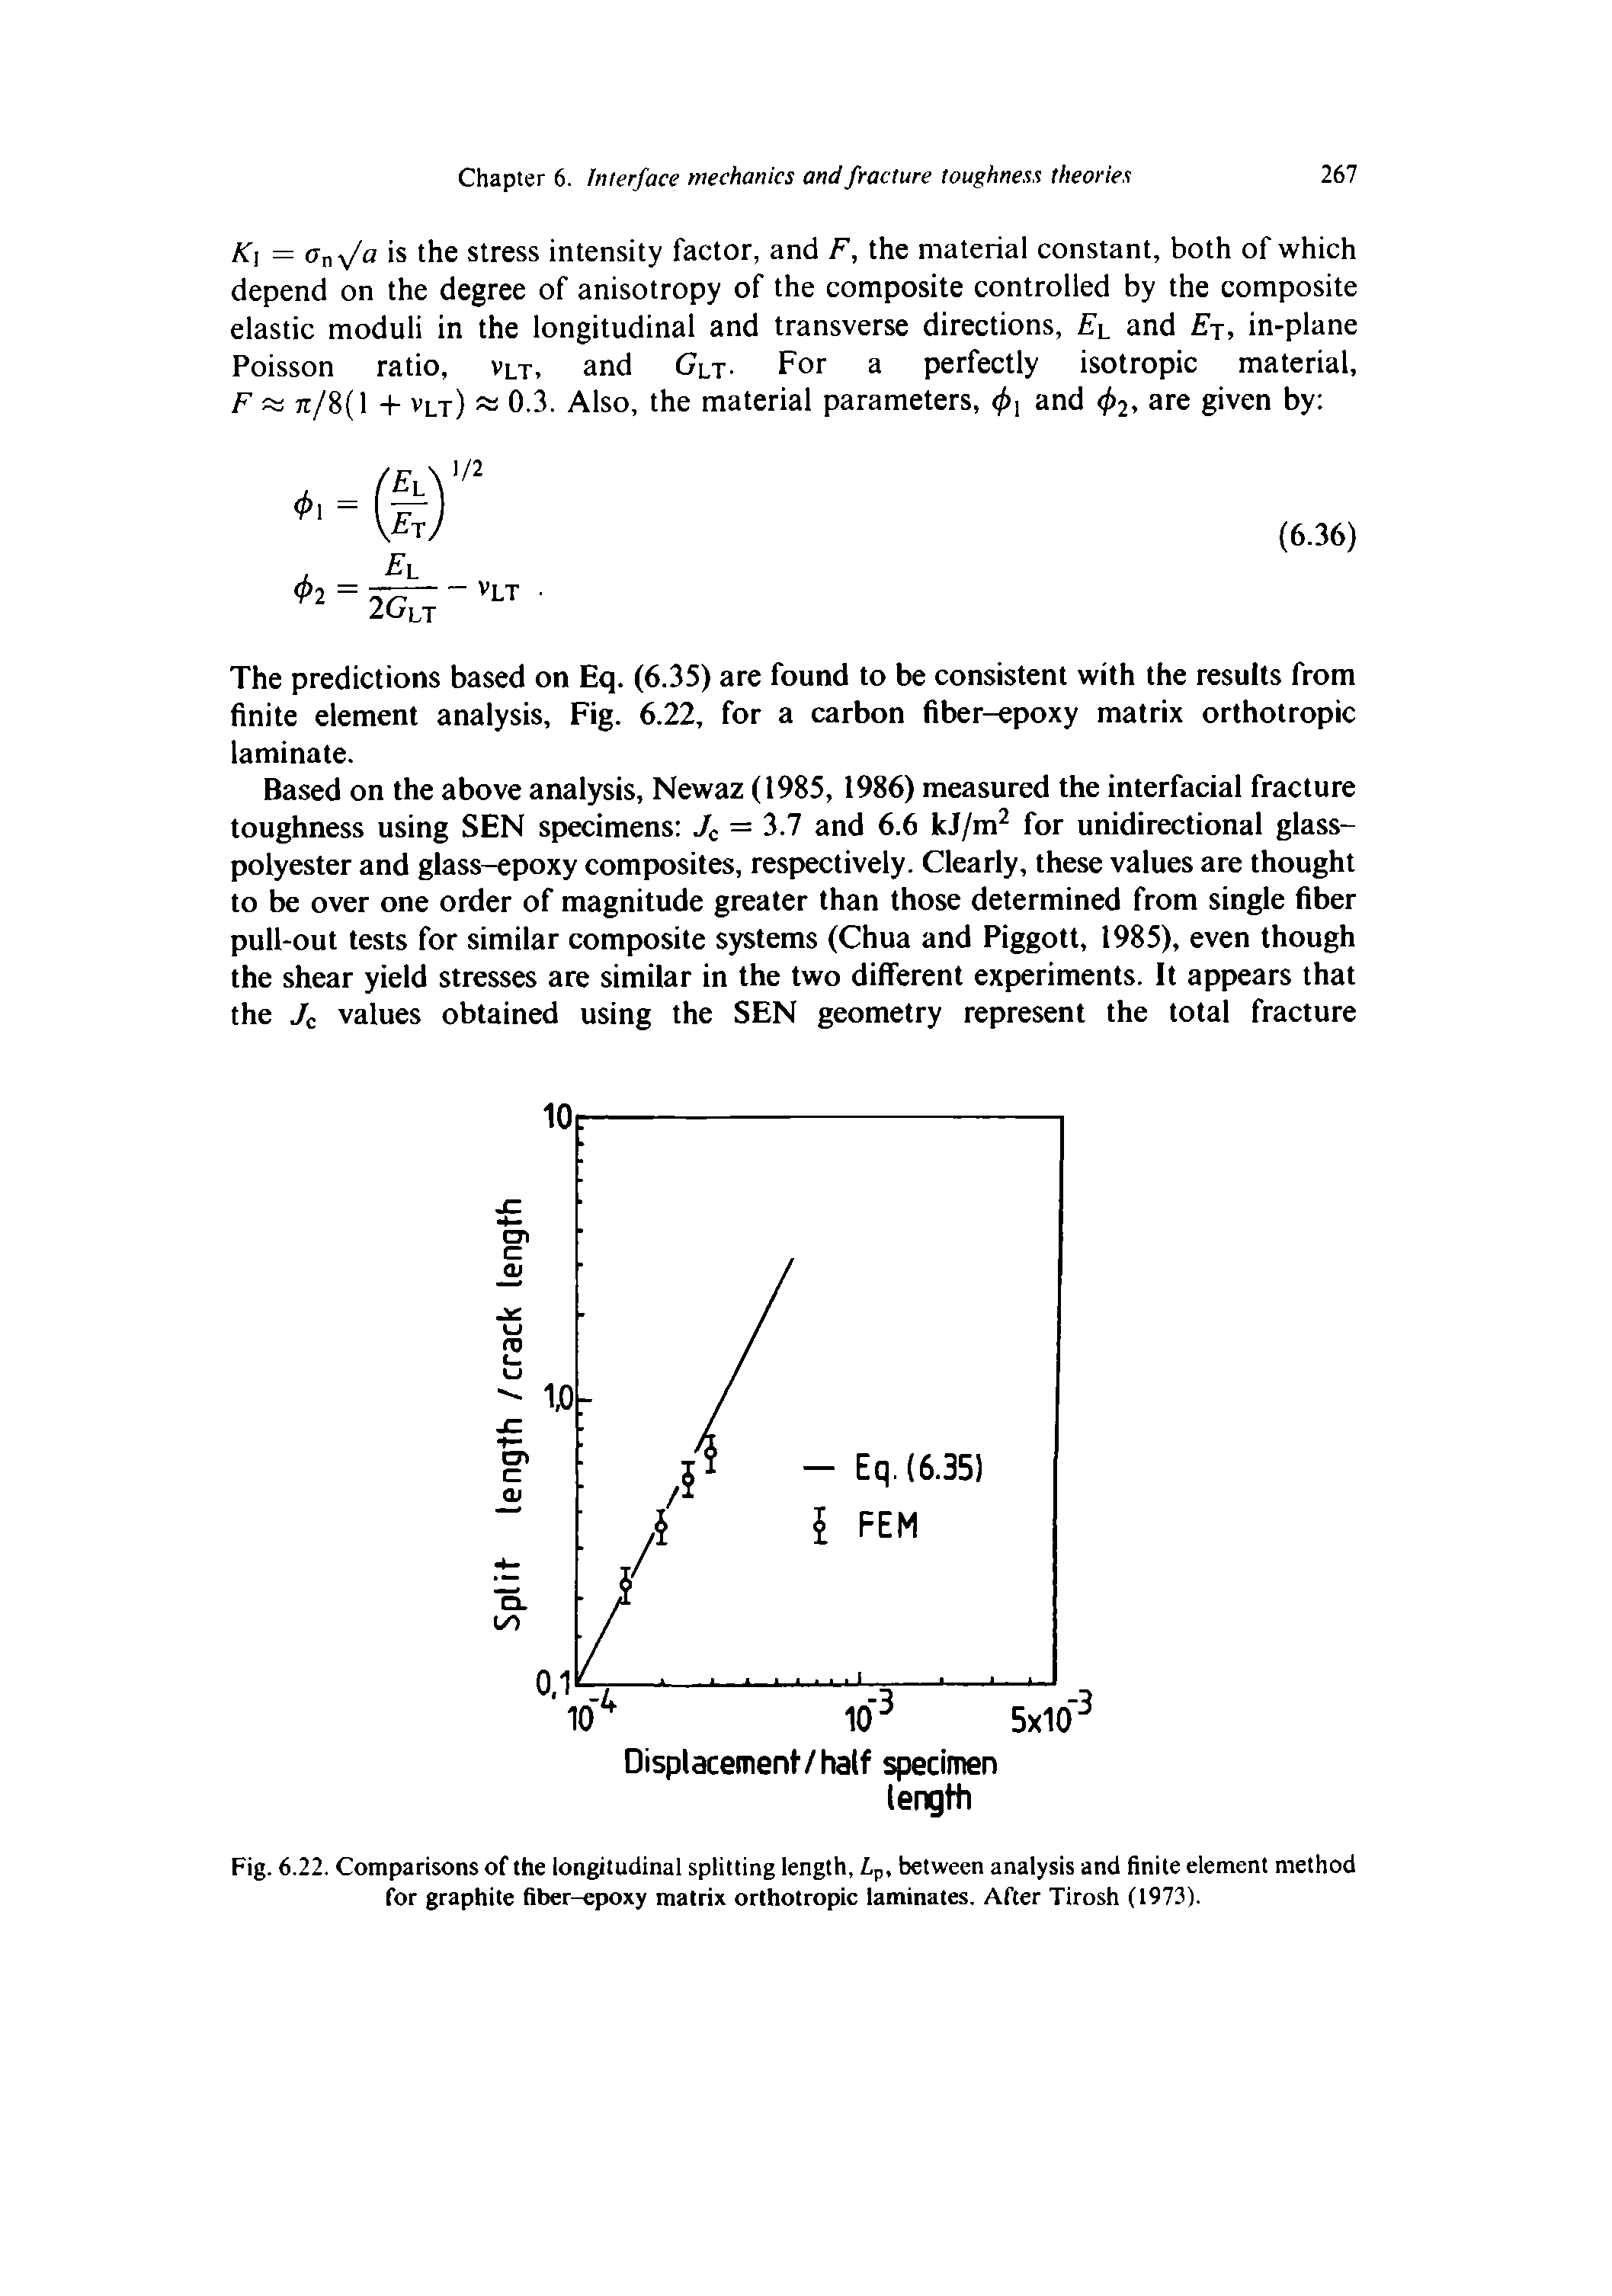 Fig. 6.22. Comparisons of the longitudinal splitting length, Z,p, between analysis and finite element method for graphite fiber-epoxy matrix orthotropic laminates. After Tirosh (1973).